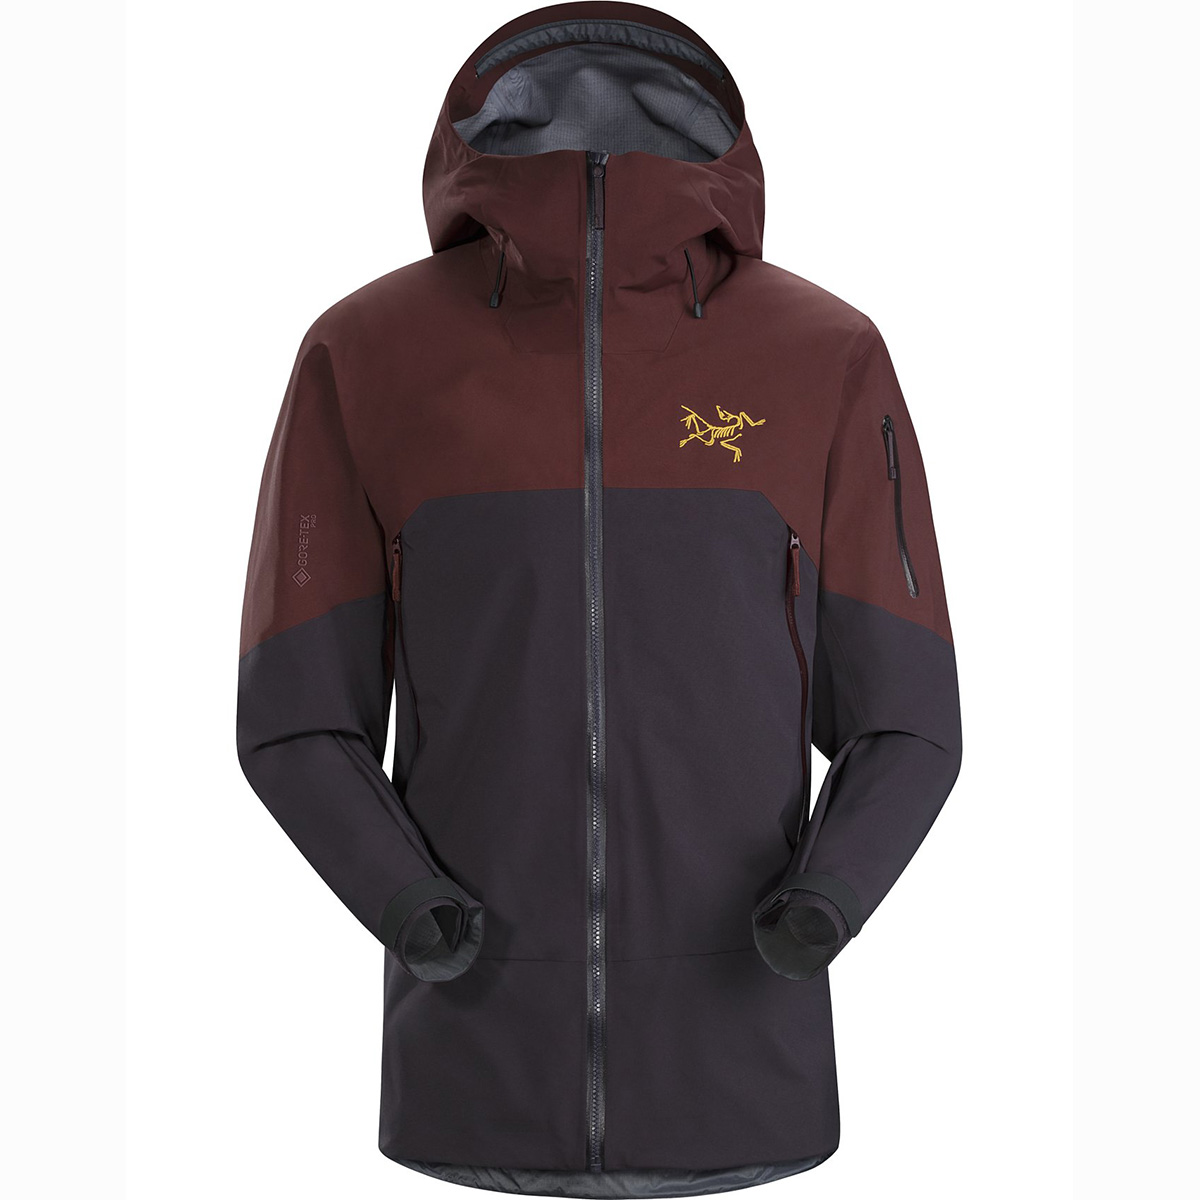 Arc'teryx Rush Jacket, men's, discontinued Fall 2019 model (free ground ...